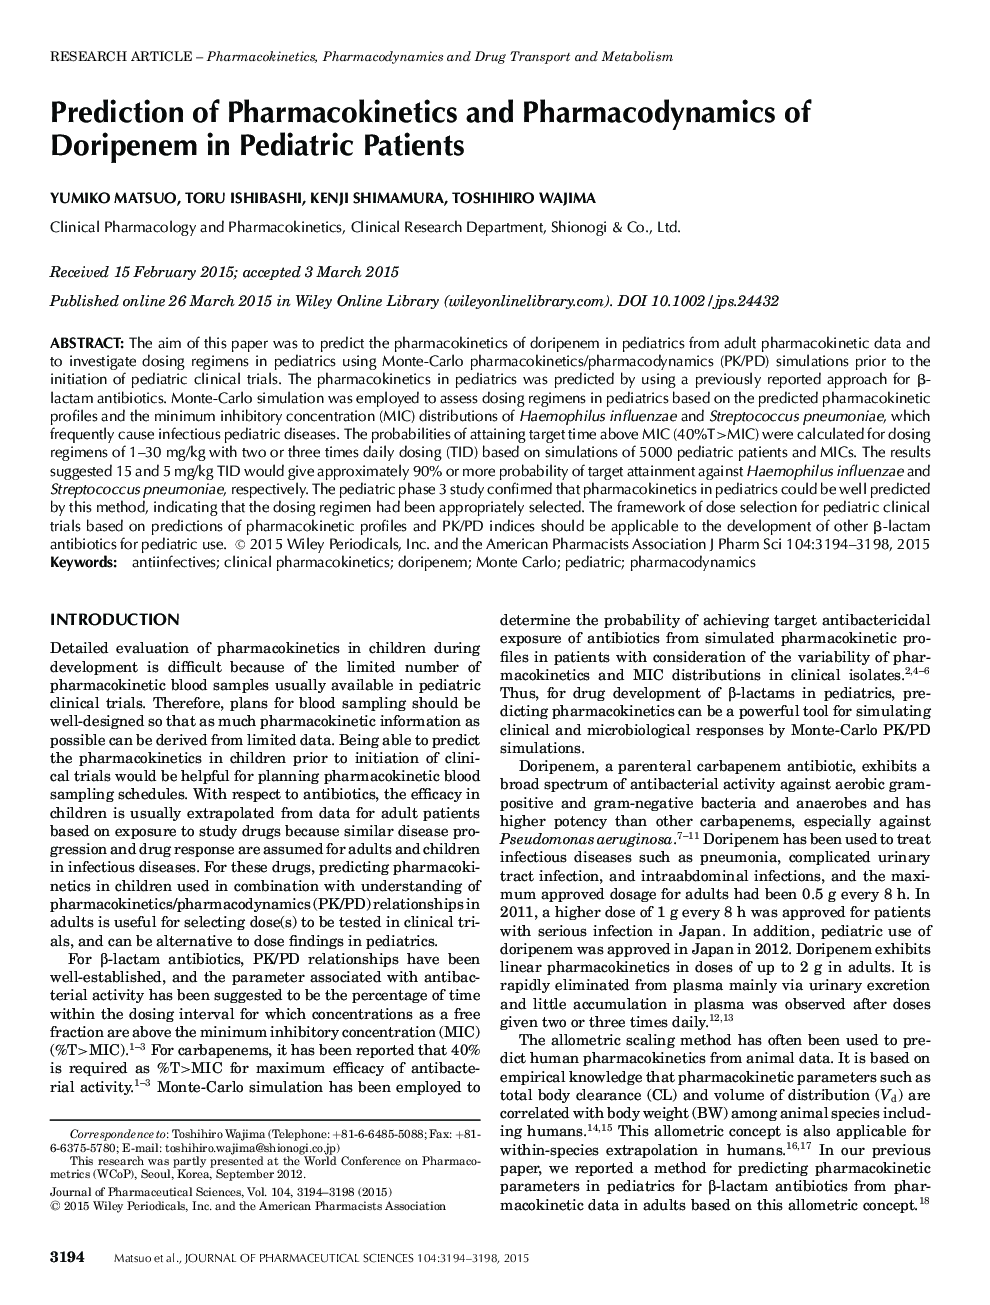 Prediction of Pharmacokinetics and Pharmacodynamics of Doripenem in Pediatric Patients 